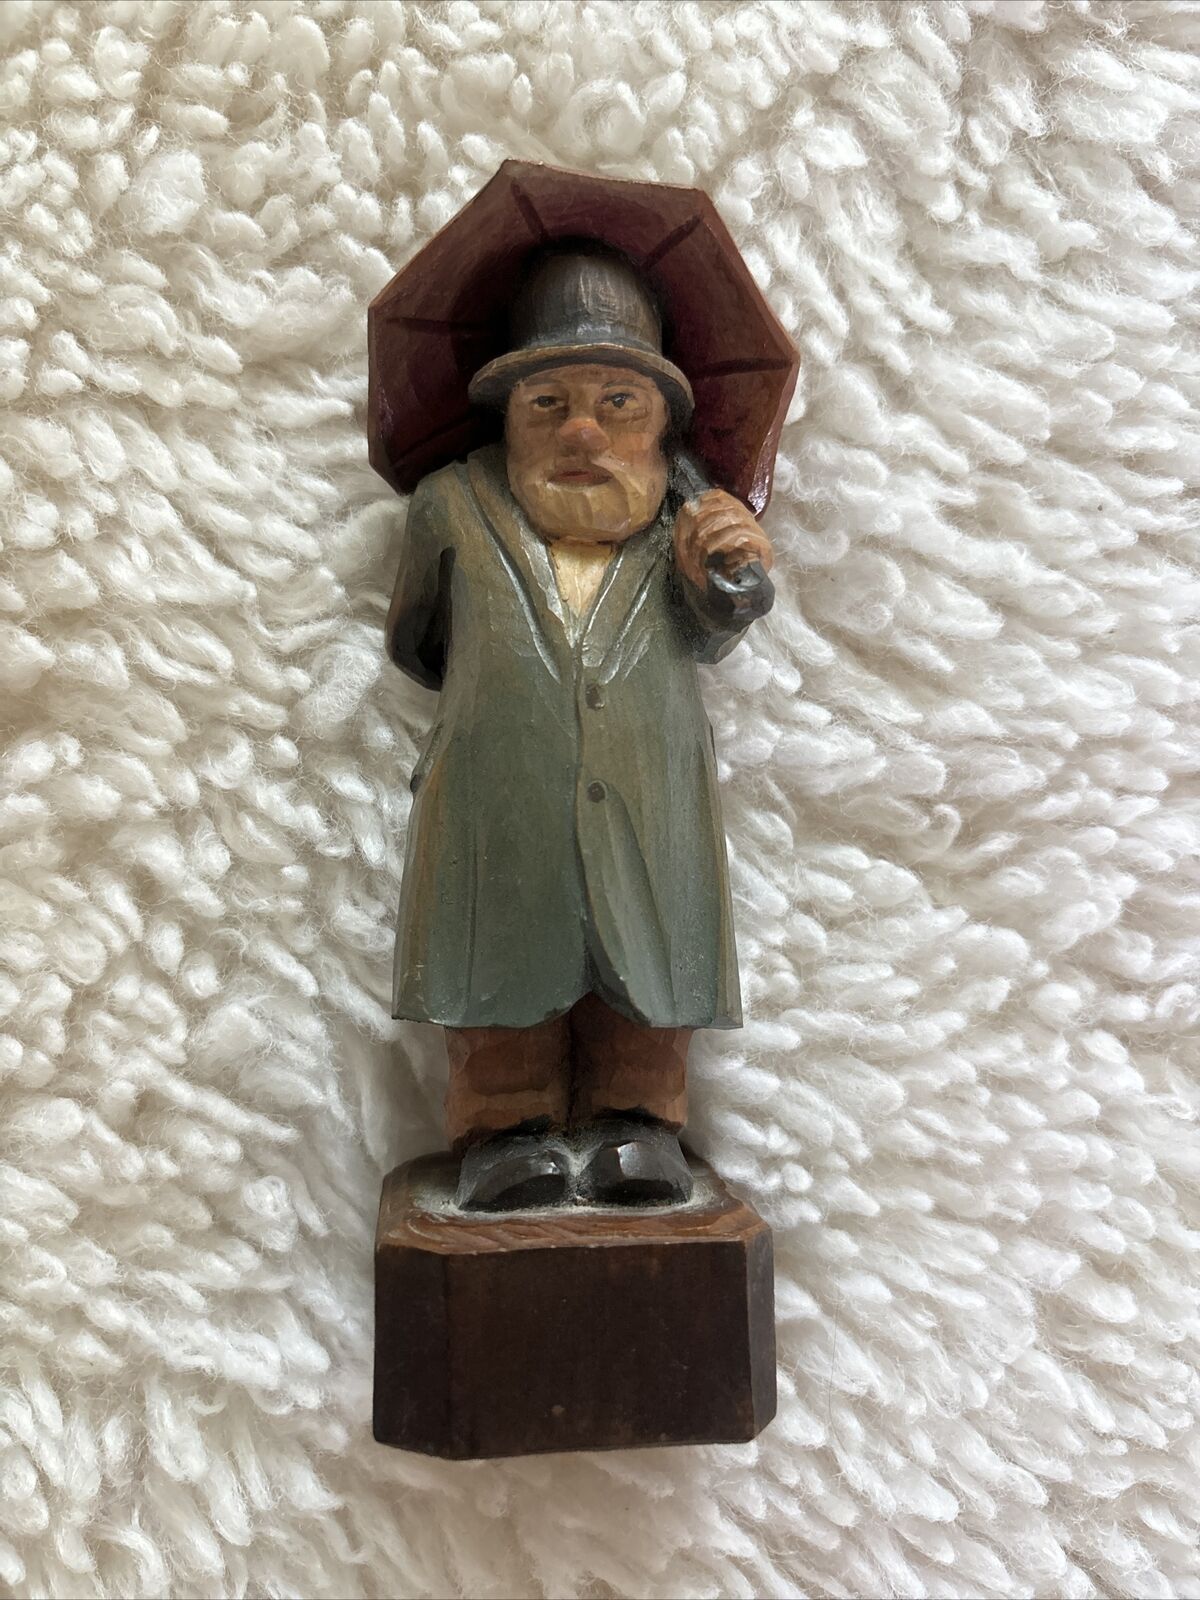 VTG Anri Wood Figurine Man Umbrella Hat Overcoat Hand Carved (1940s?) 5.5” NICE